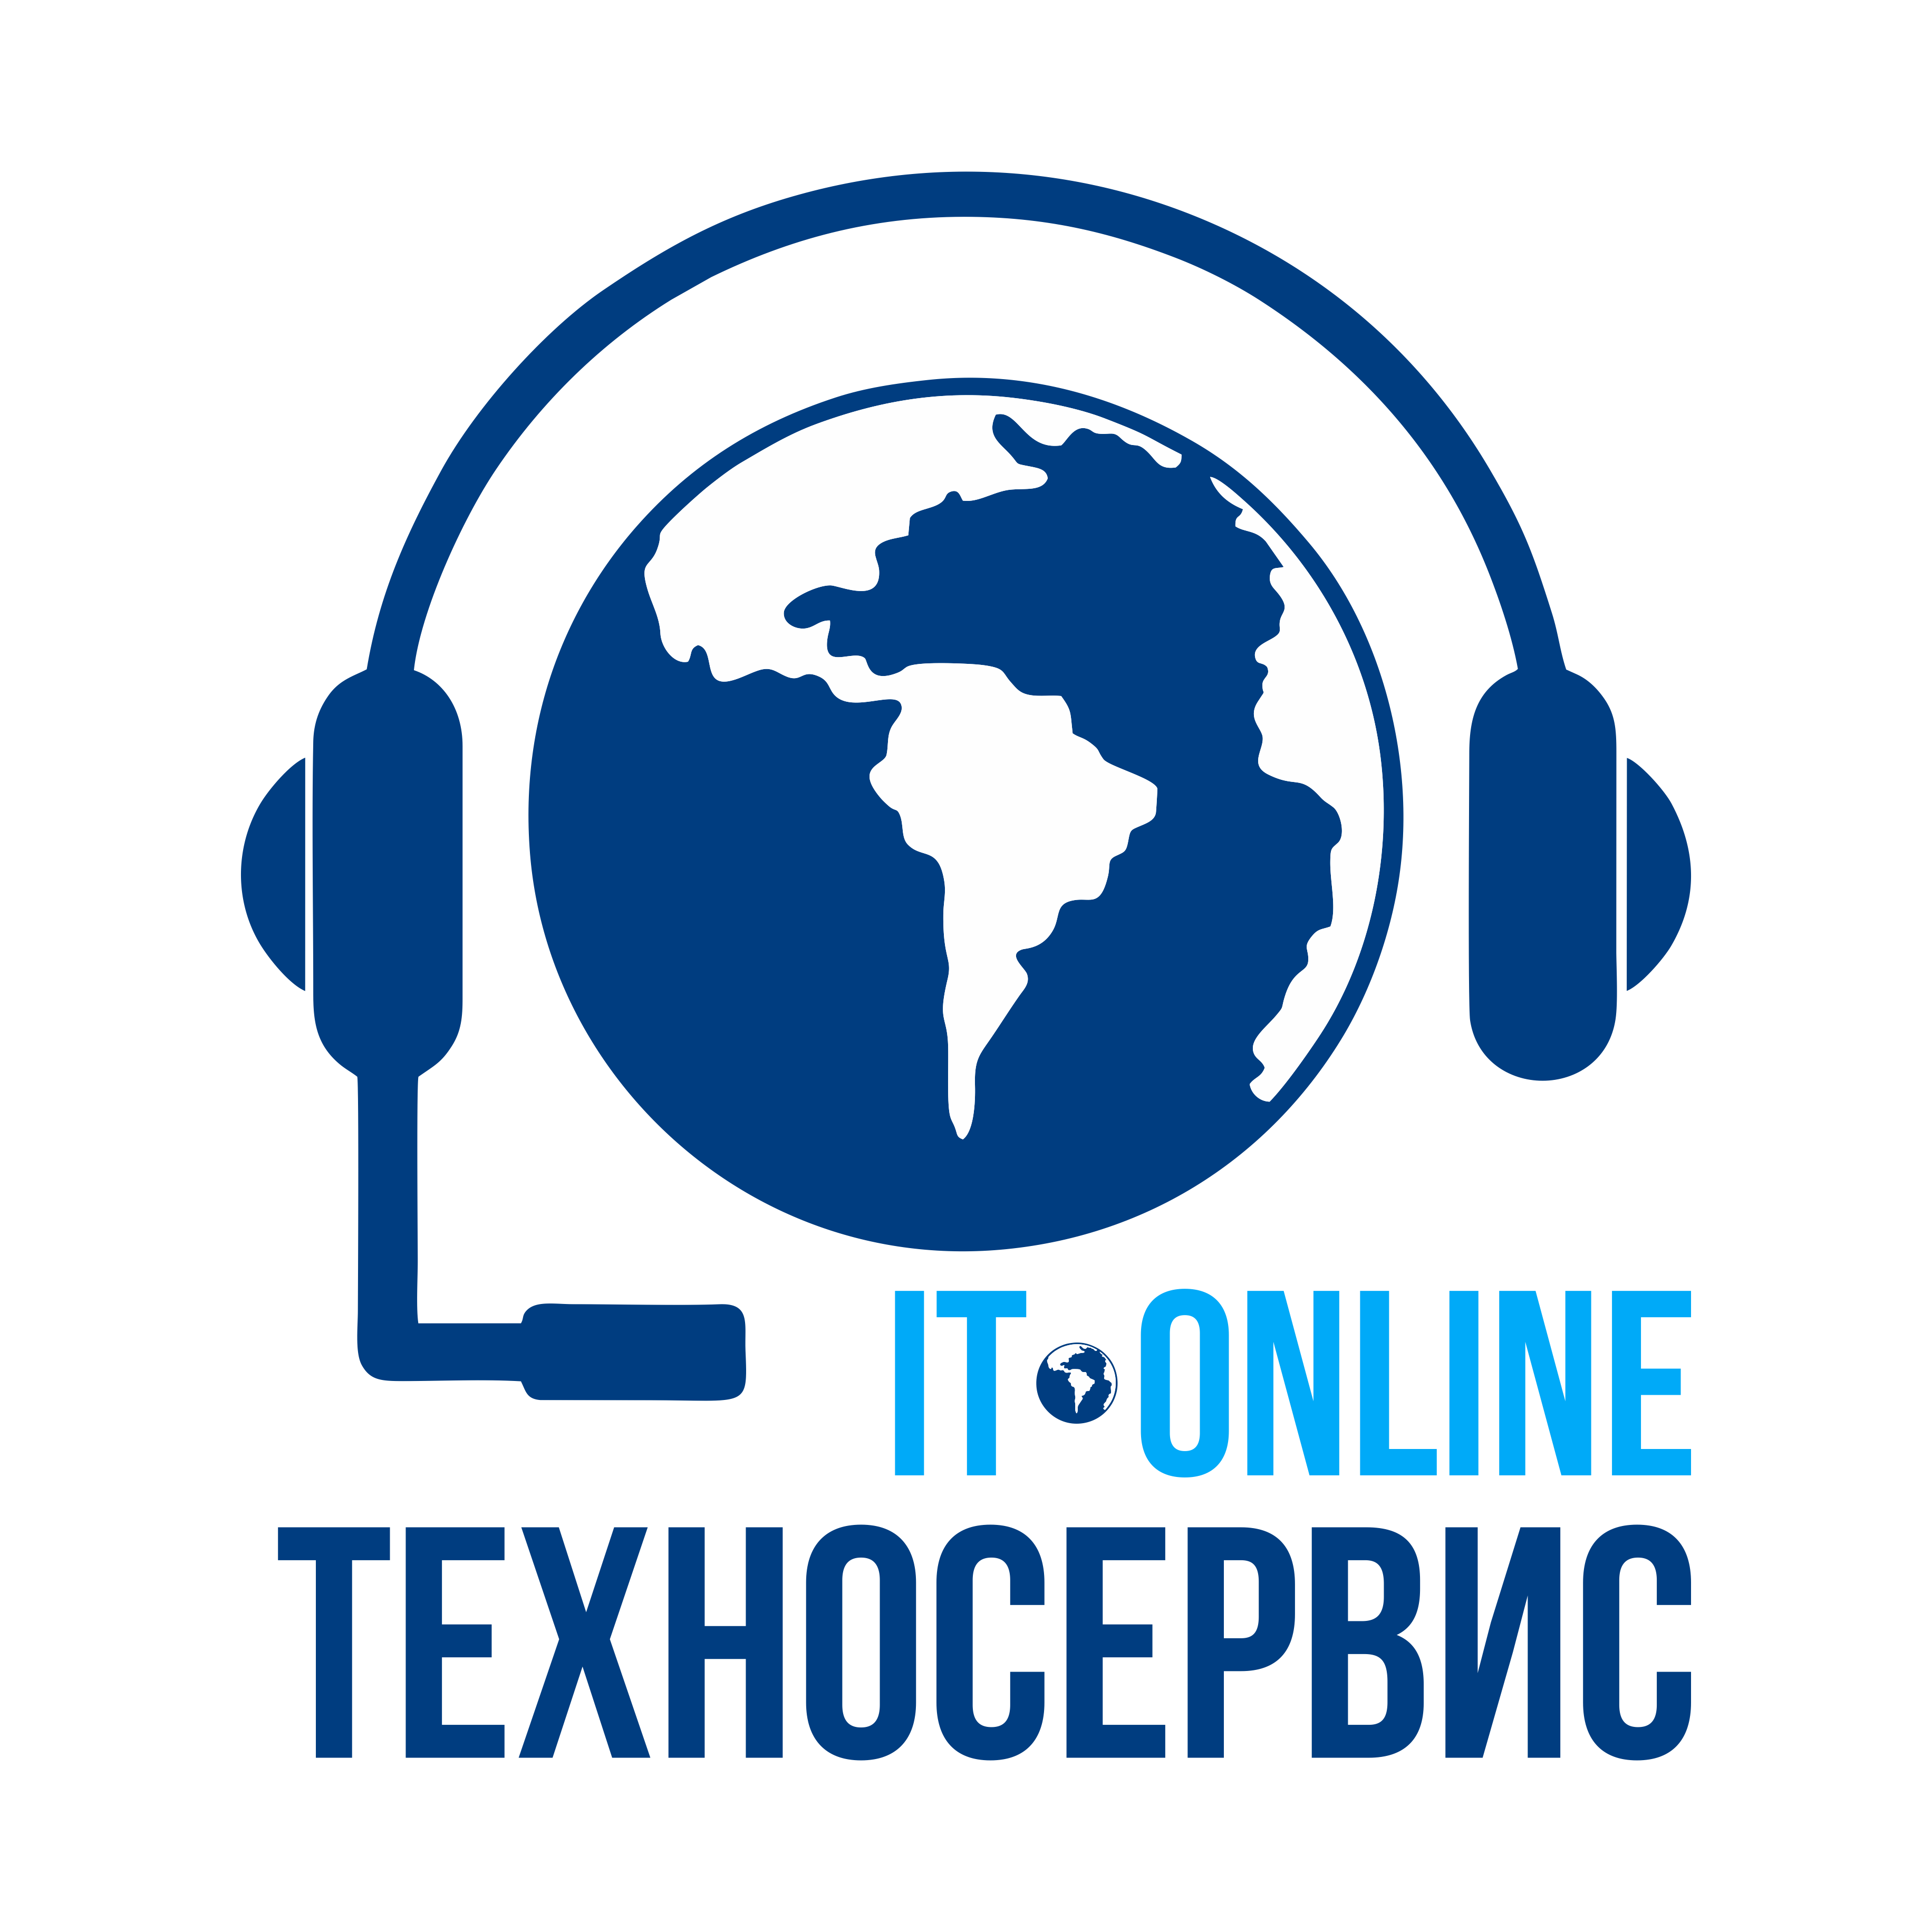 ООО "Техносервис" - Город Санкт-Петербург logo.png